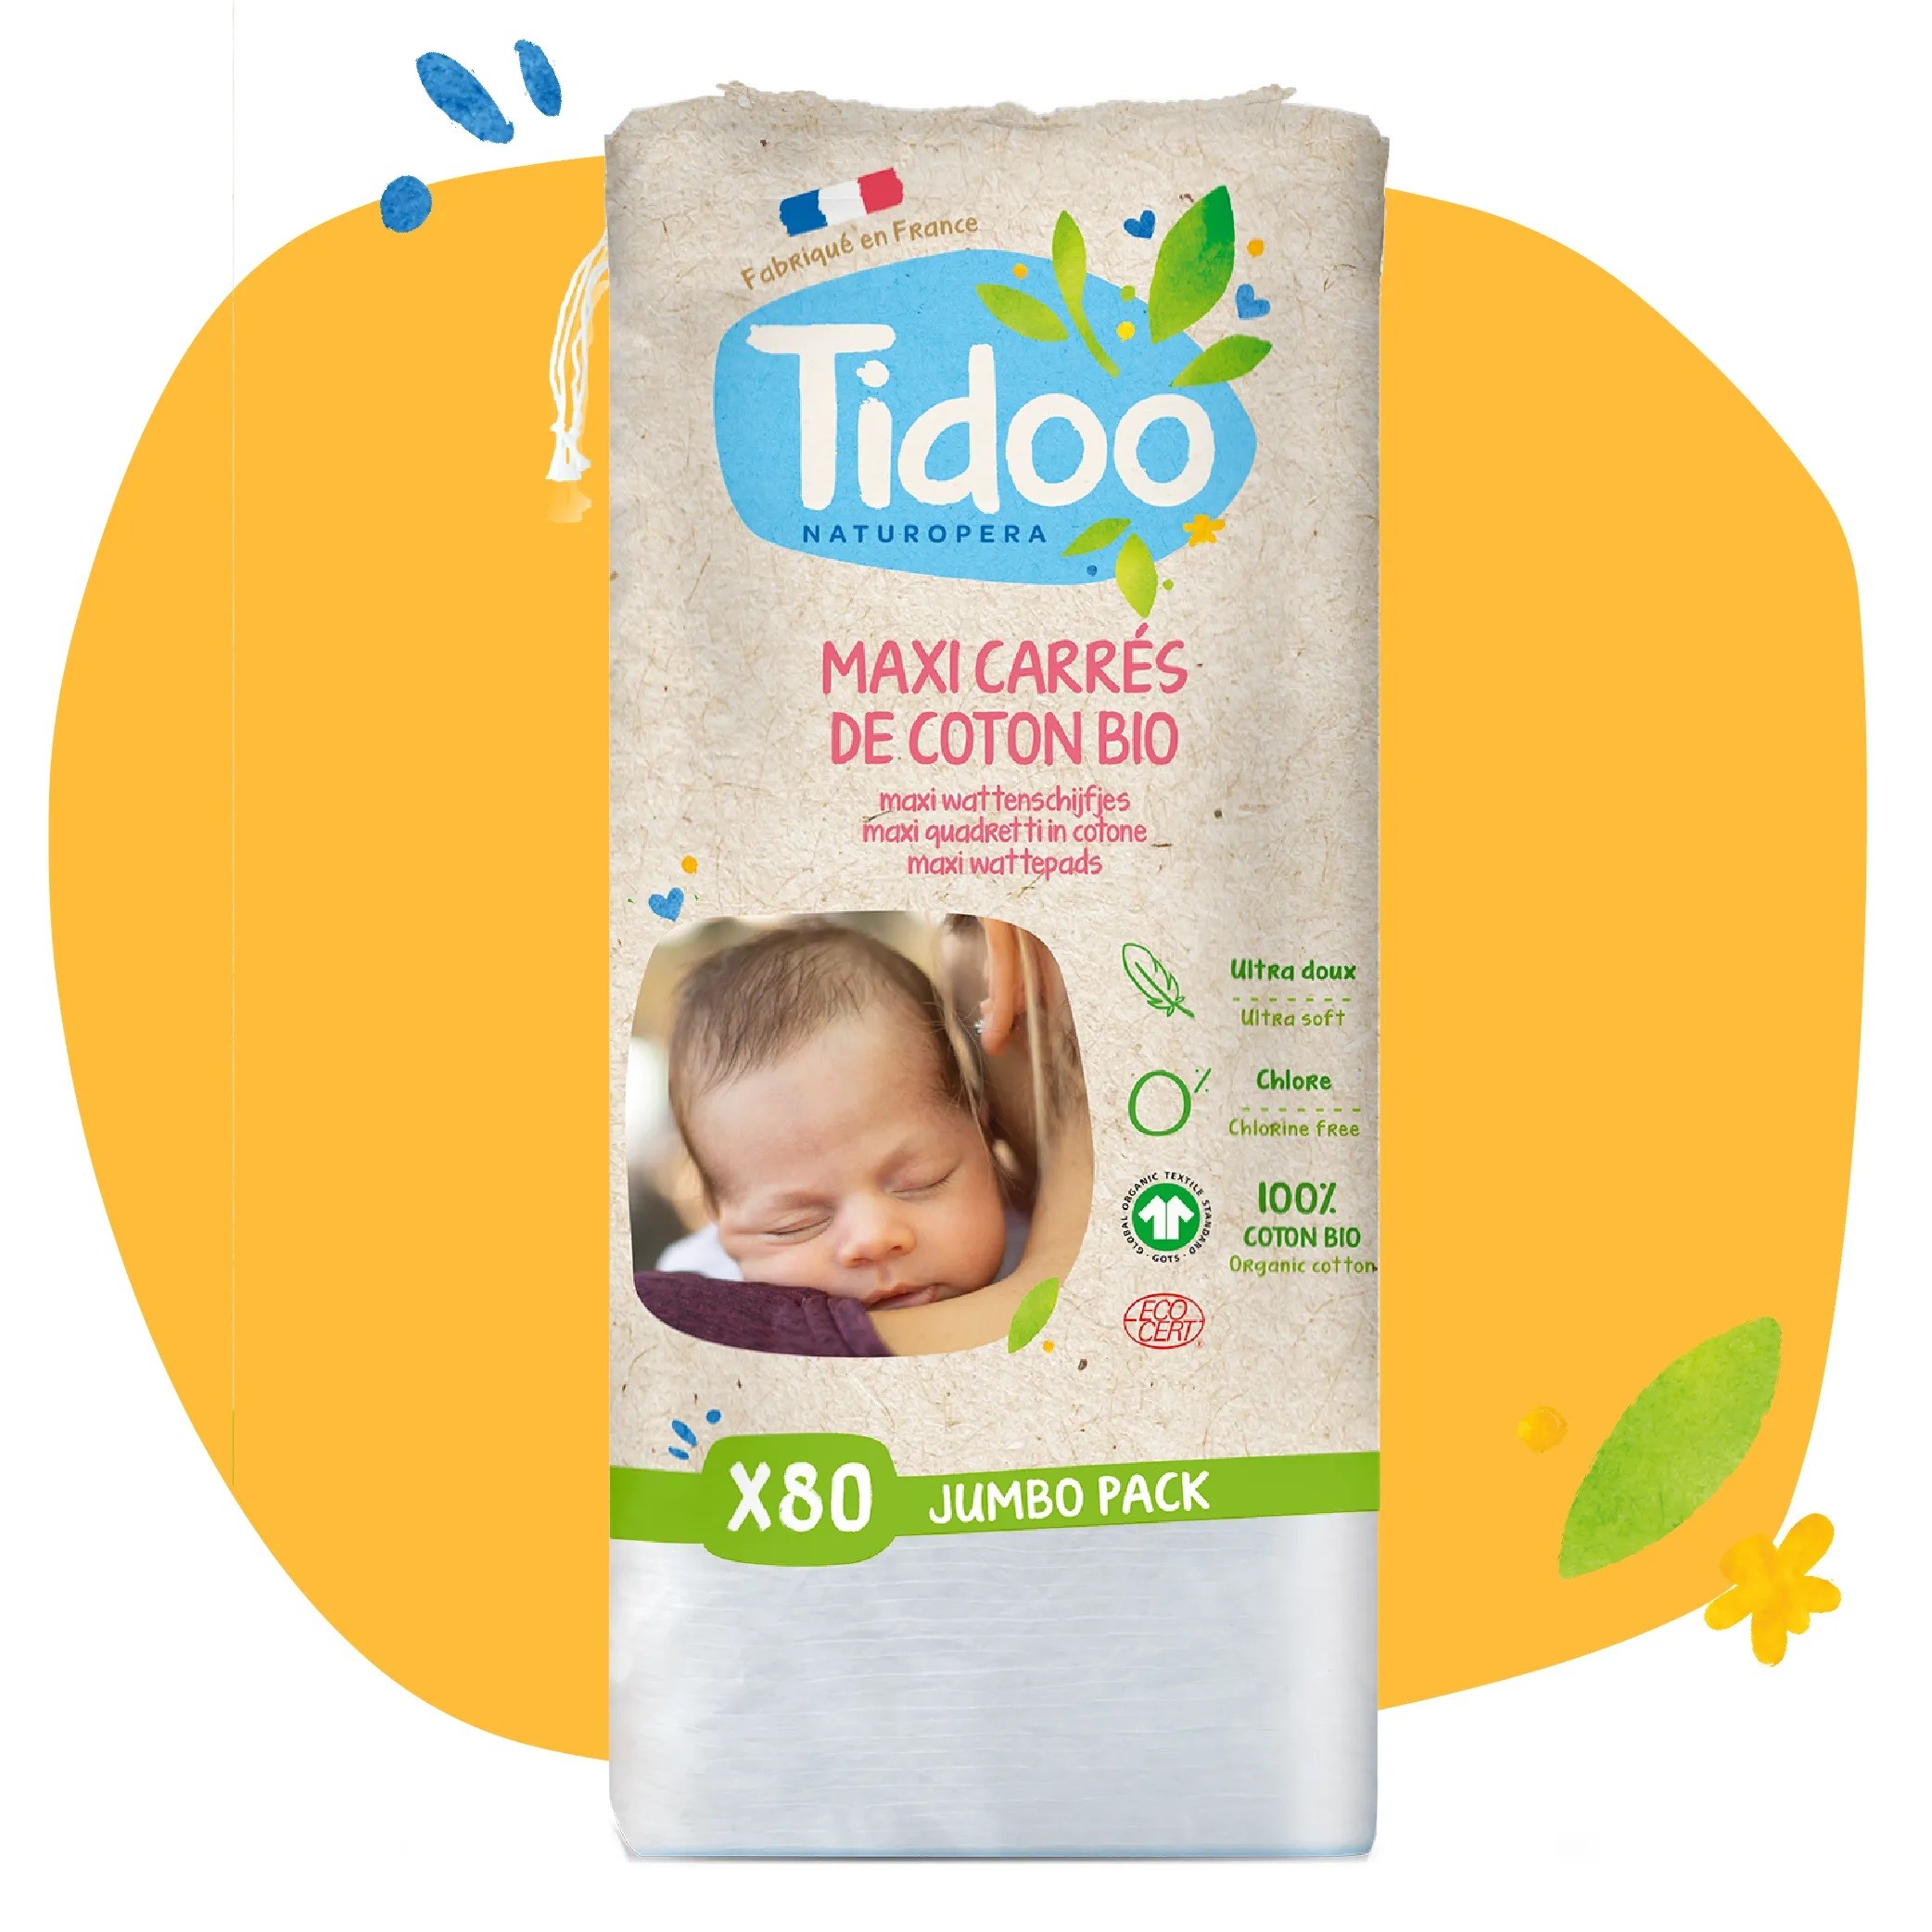 Carrés de coton bébé bio made in France - Tidoo